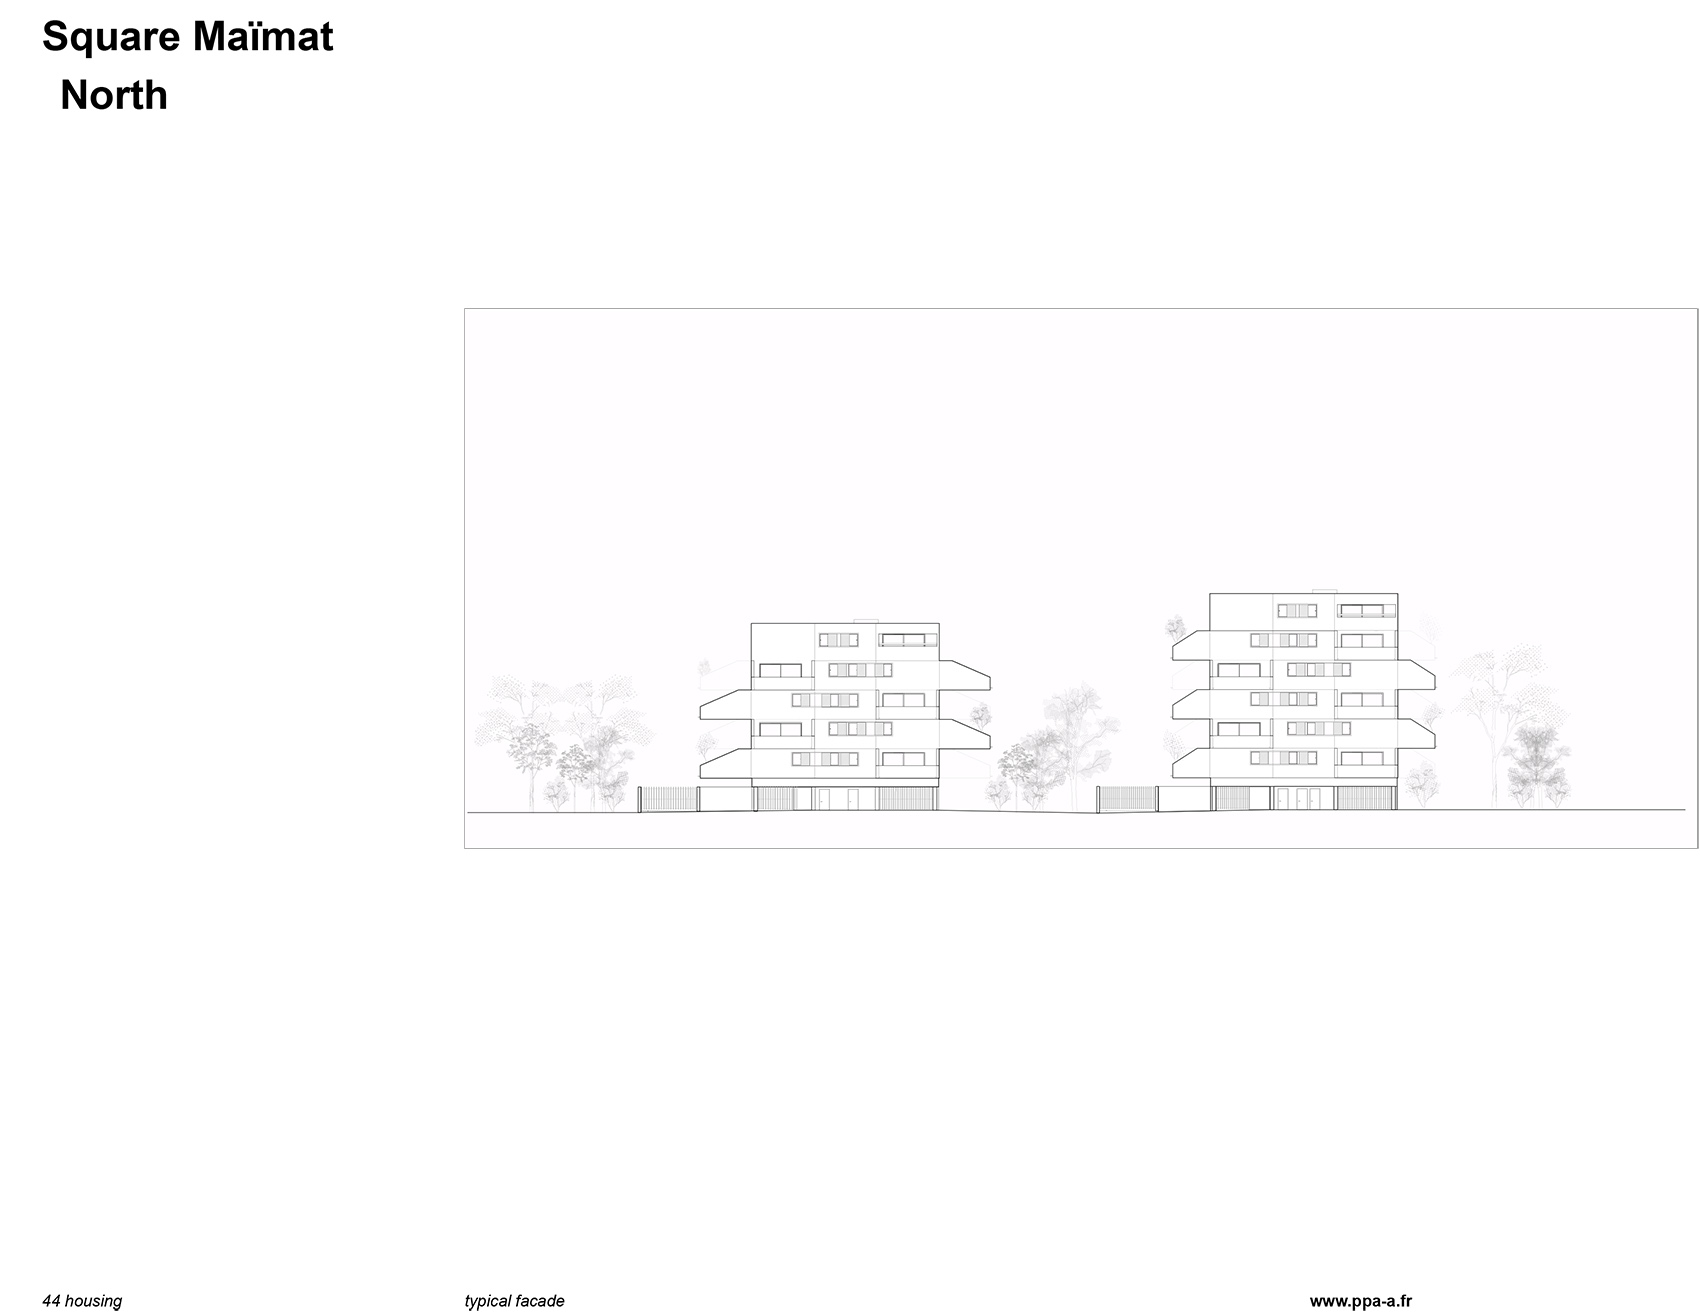 Square Maïmat住宅区更新，法国/释放公共空间，连接社区居民-114